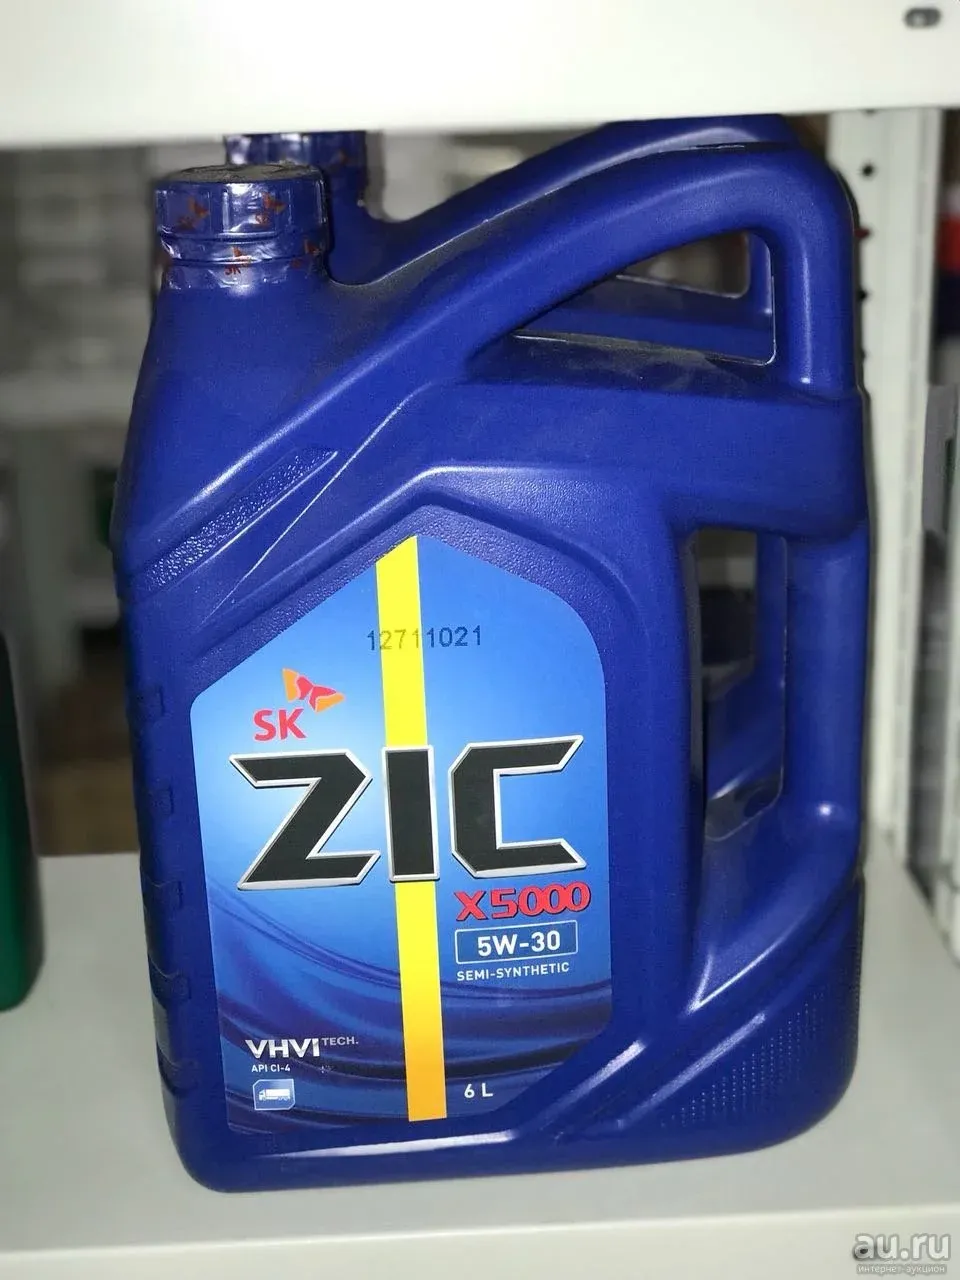 Полусинтетическое масло zic. ZIC x5 5w-30 6л. ZIC x5000 5w-30 6л. ZIC x5 5w30 Semi Synthetic. ZIC x5 Diesel 5w-30 4л.